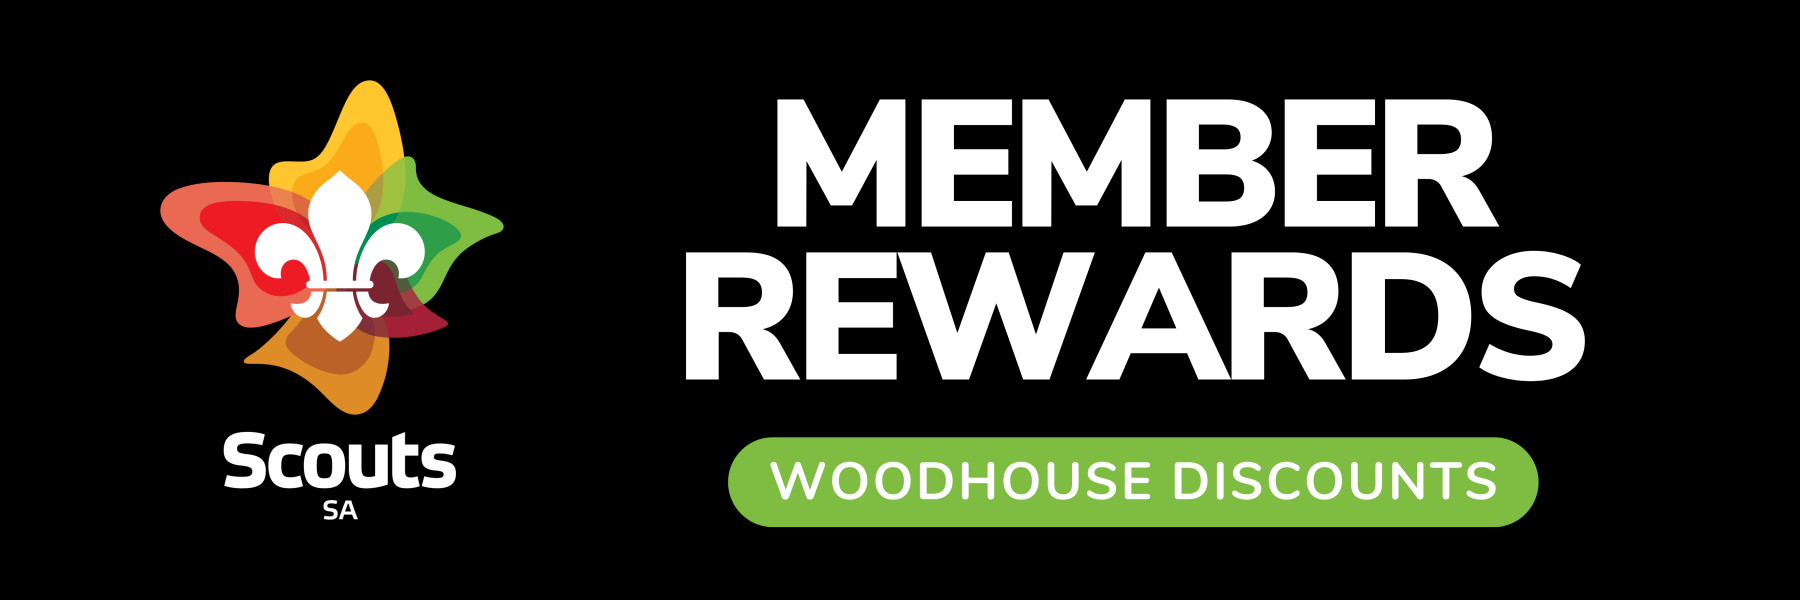 Member Rewards Woodhouse Discounts Banner